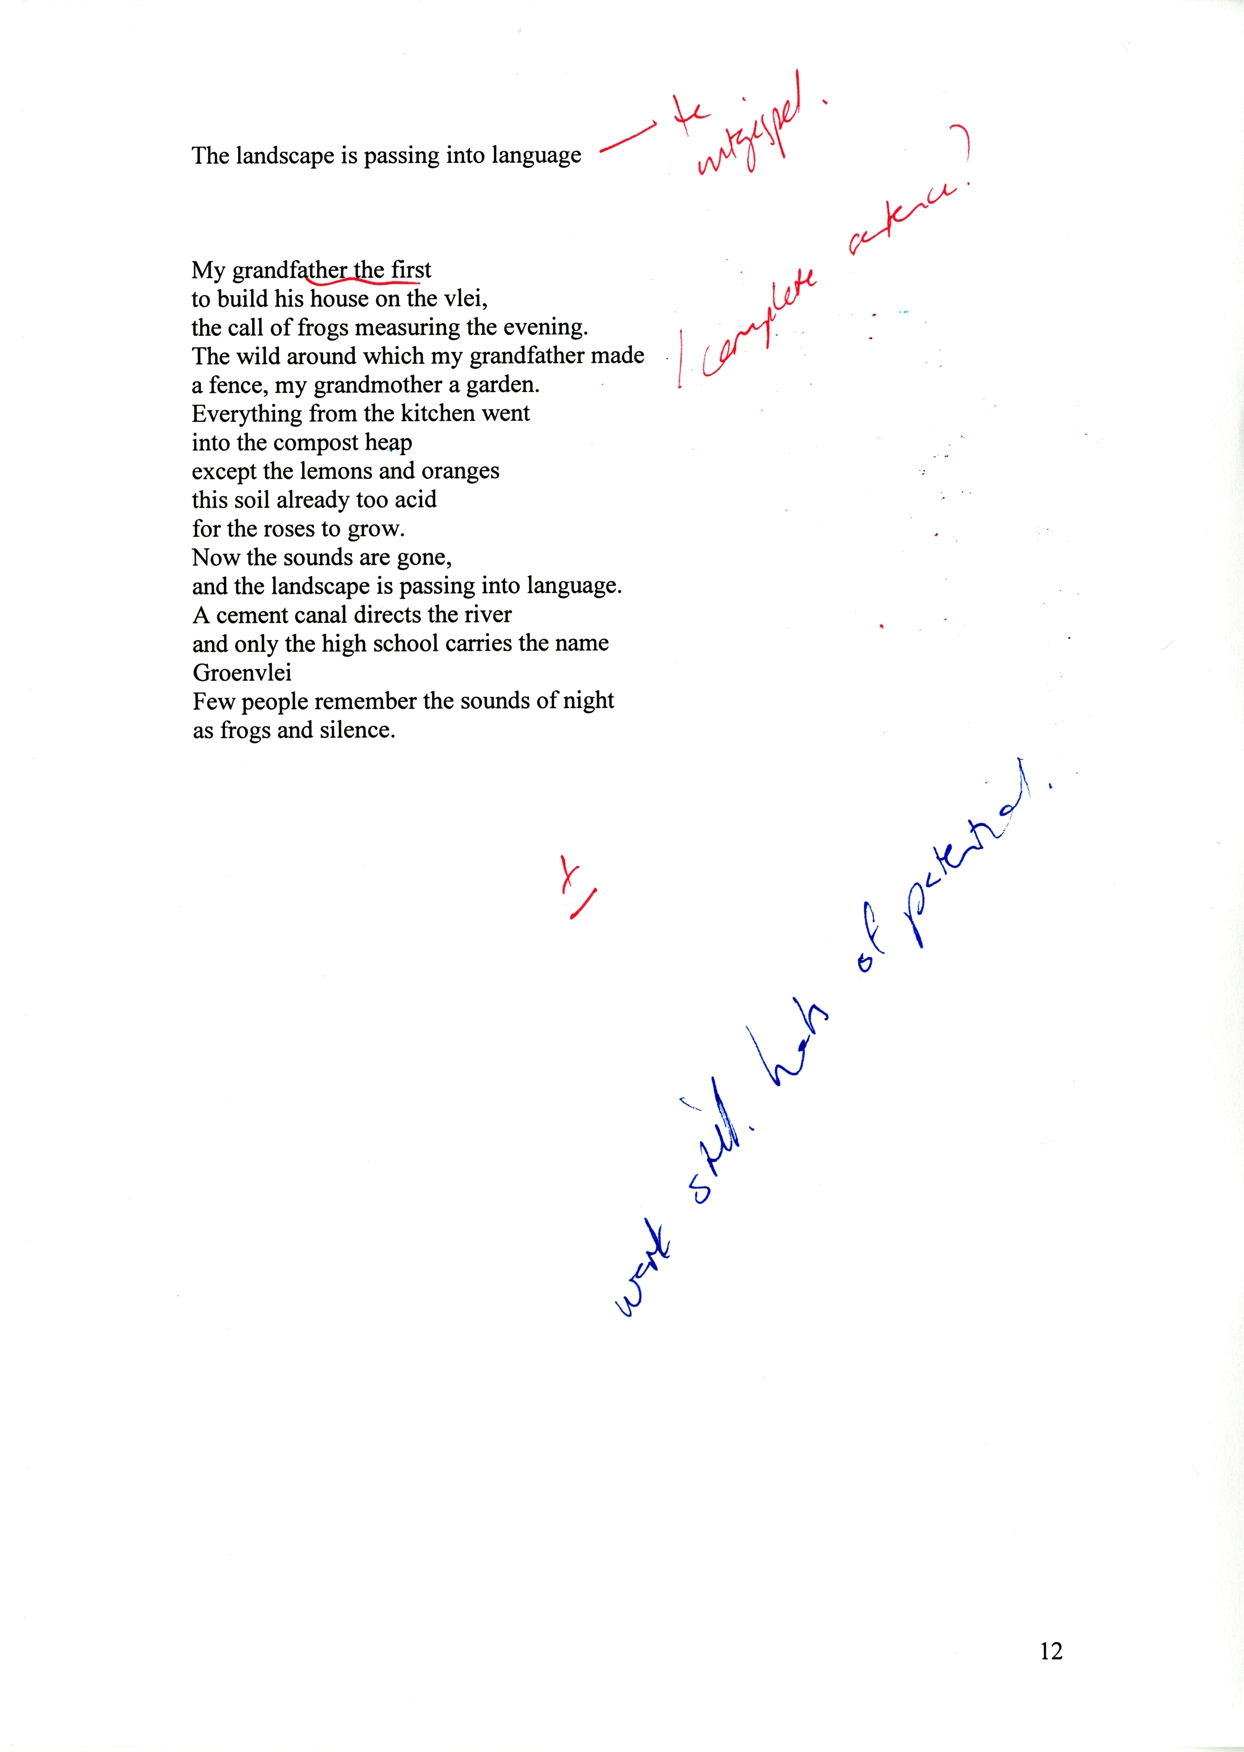 Manuscript draft of Gabeba Baderoon’s poem ‘Landscape is Passing into Language’, 2006.